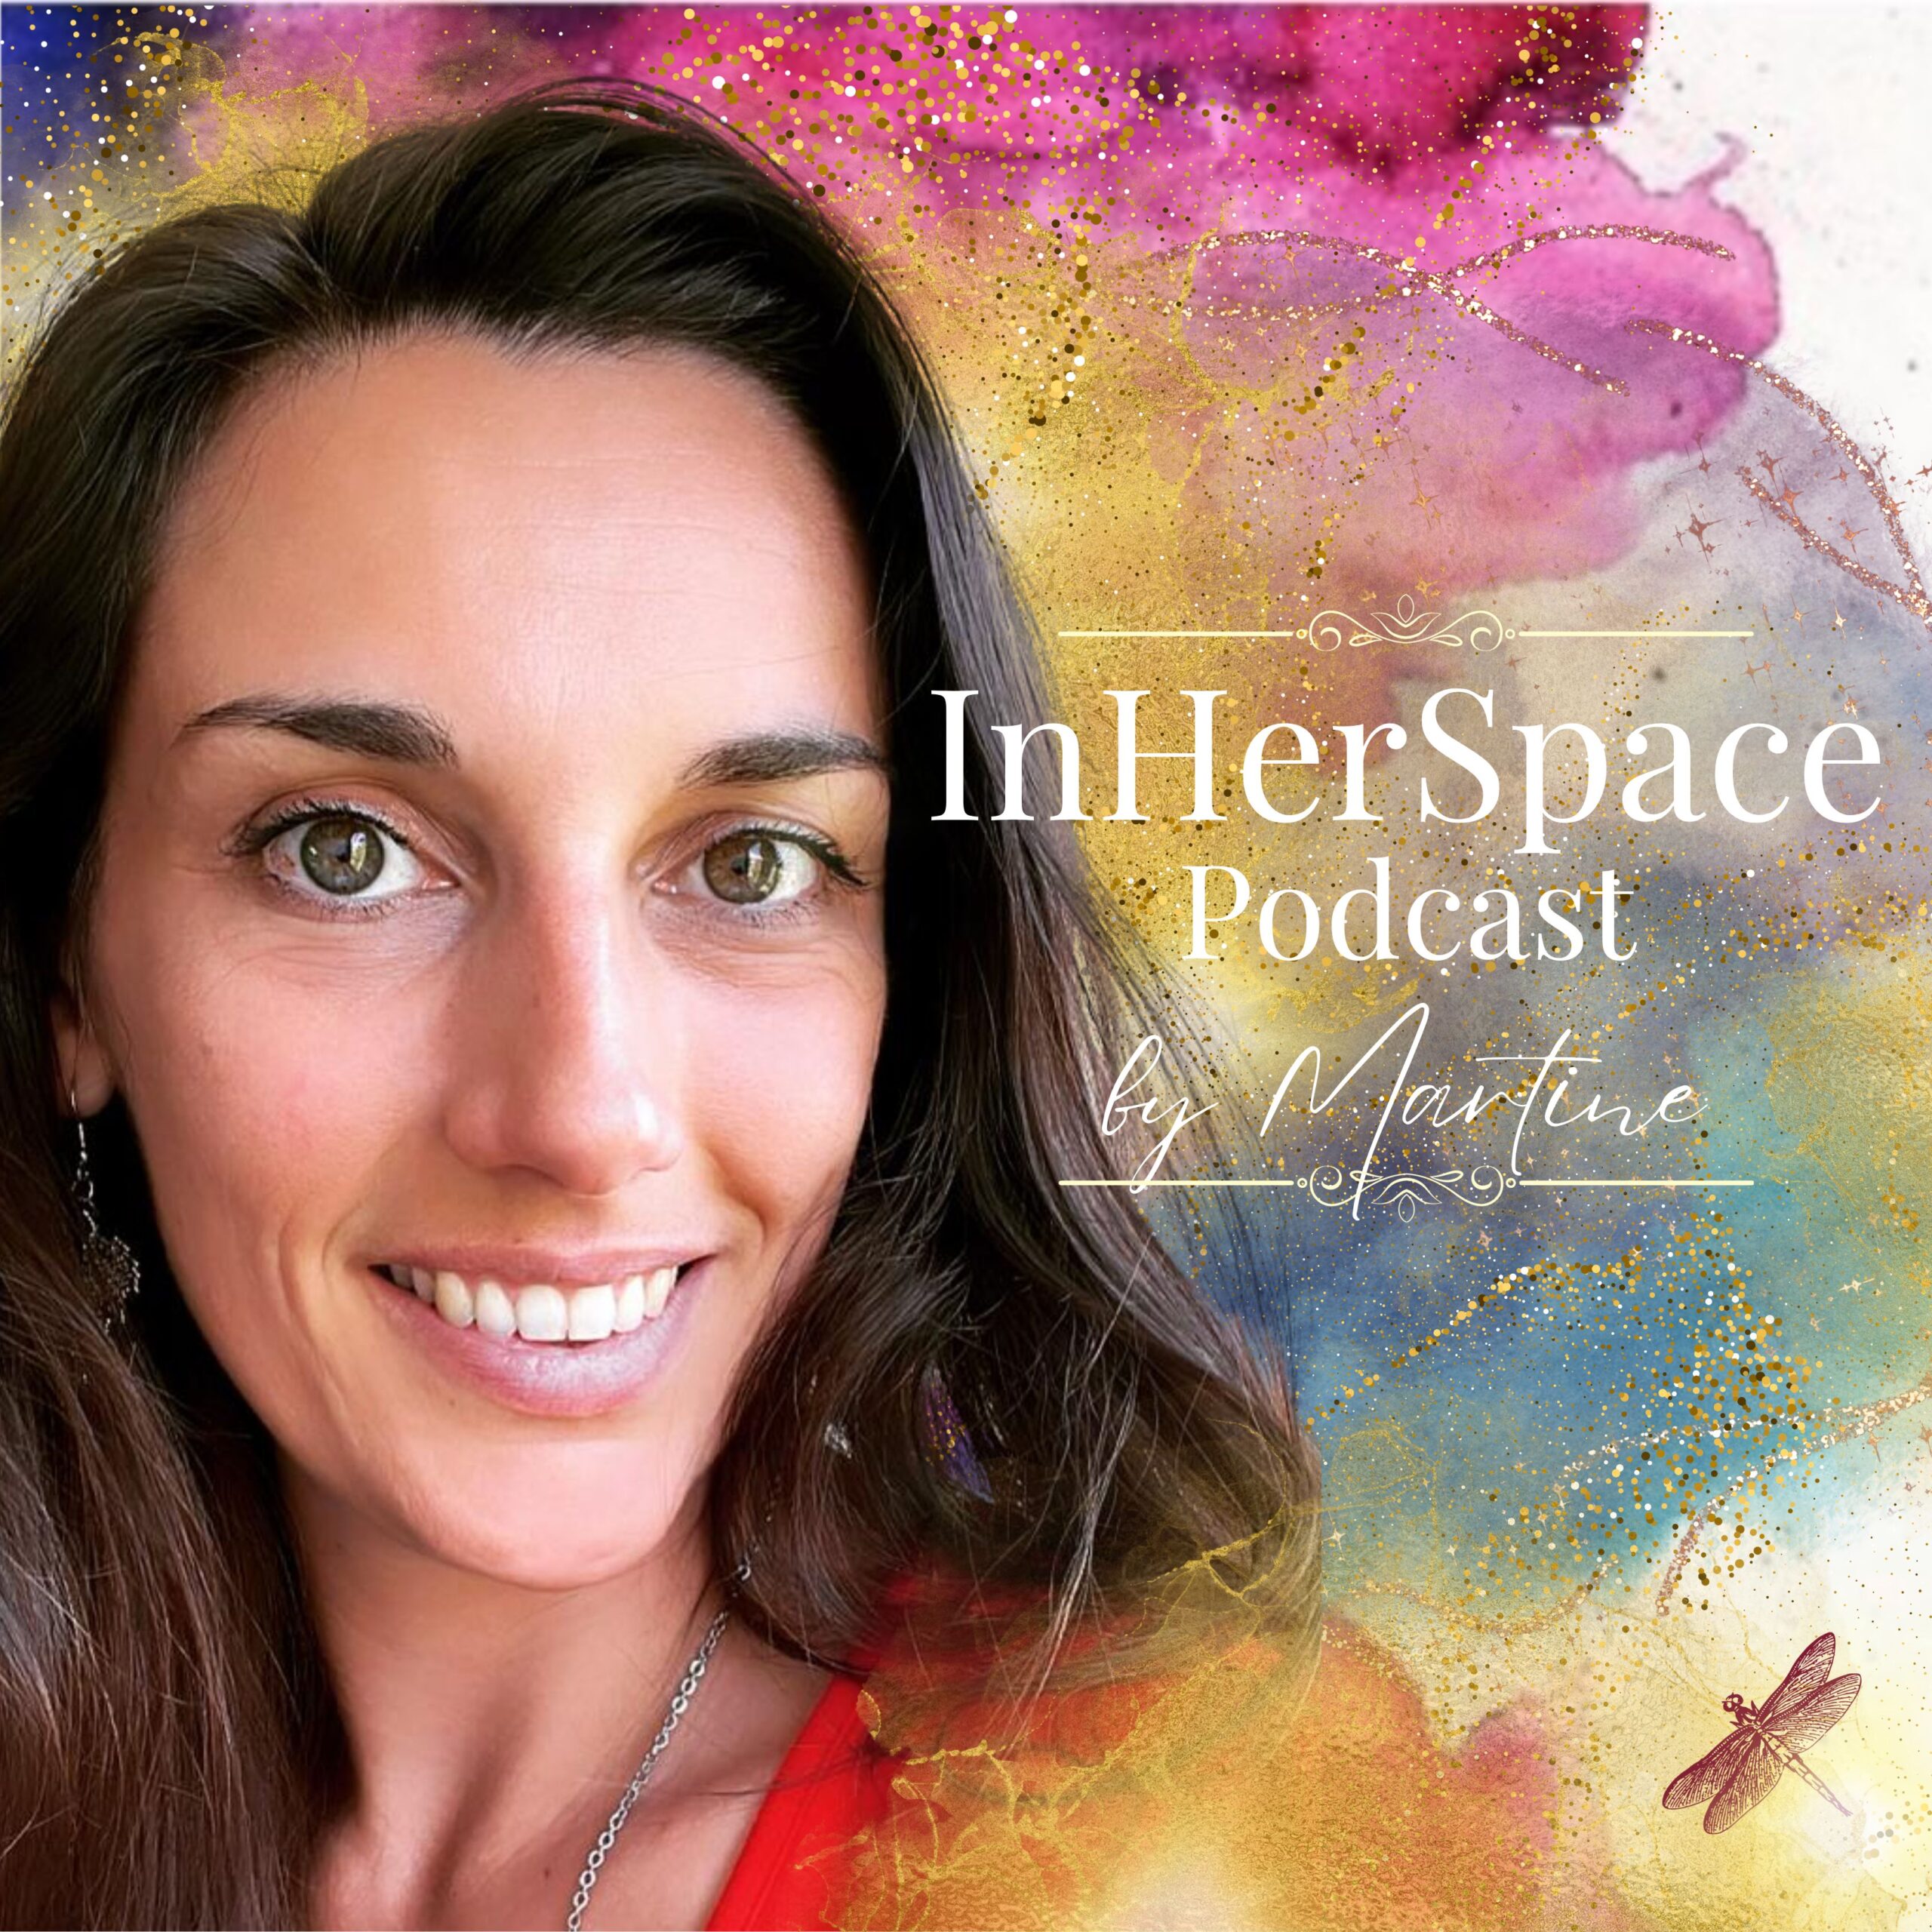 InHerSpace podcast cover artwork Martine van den Dool